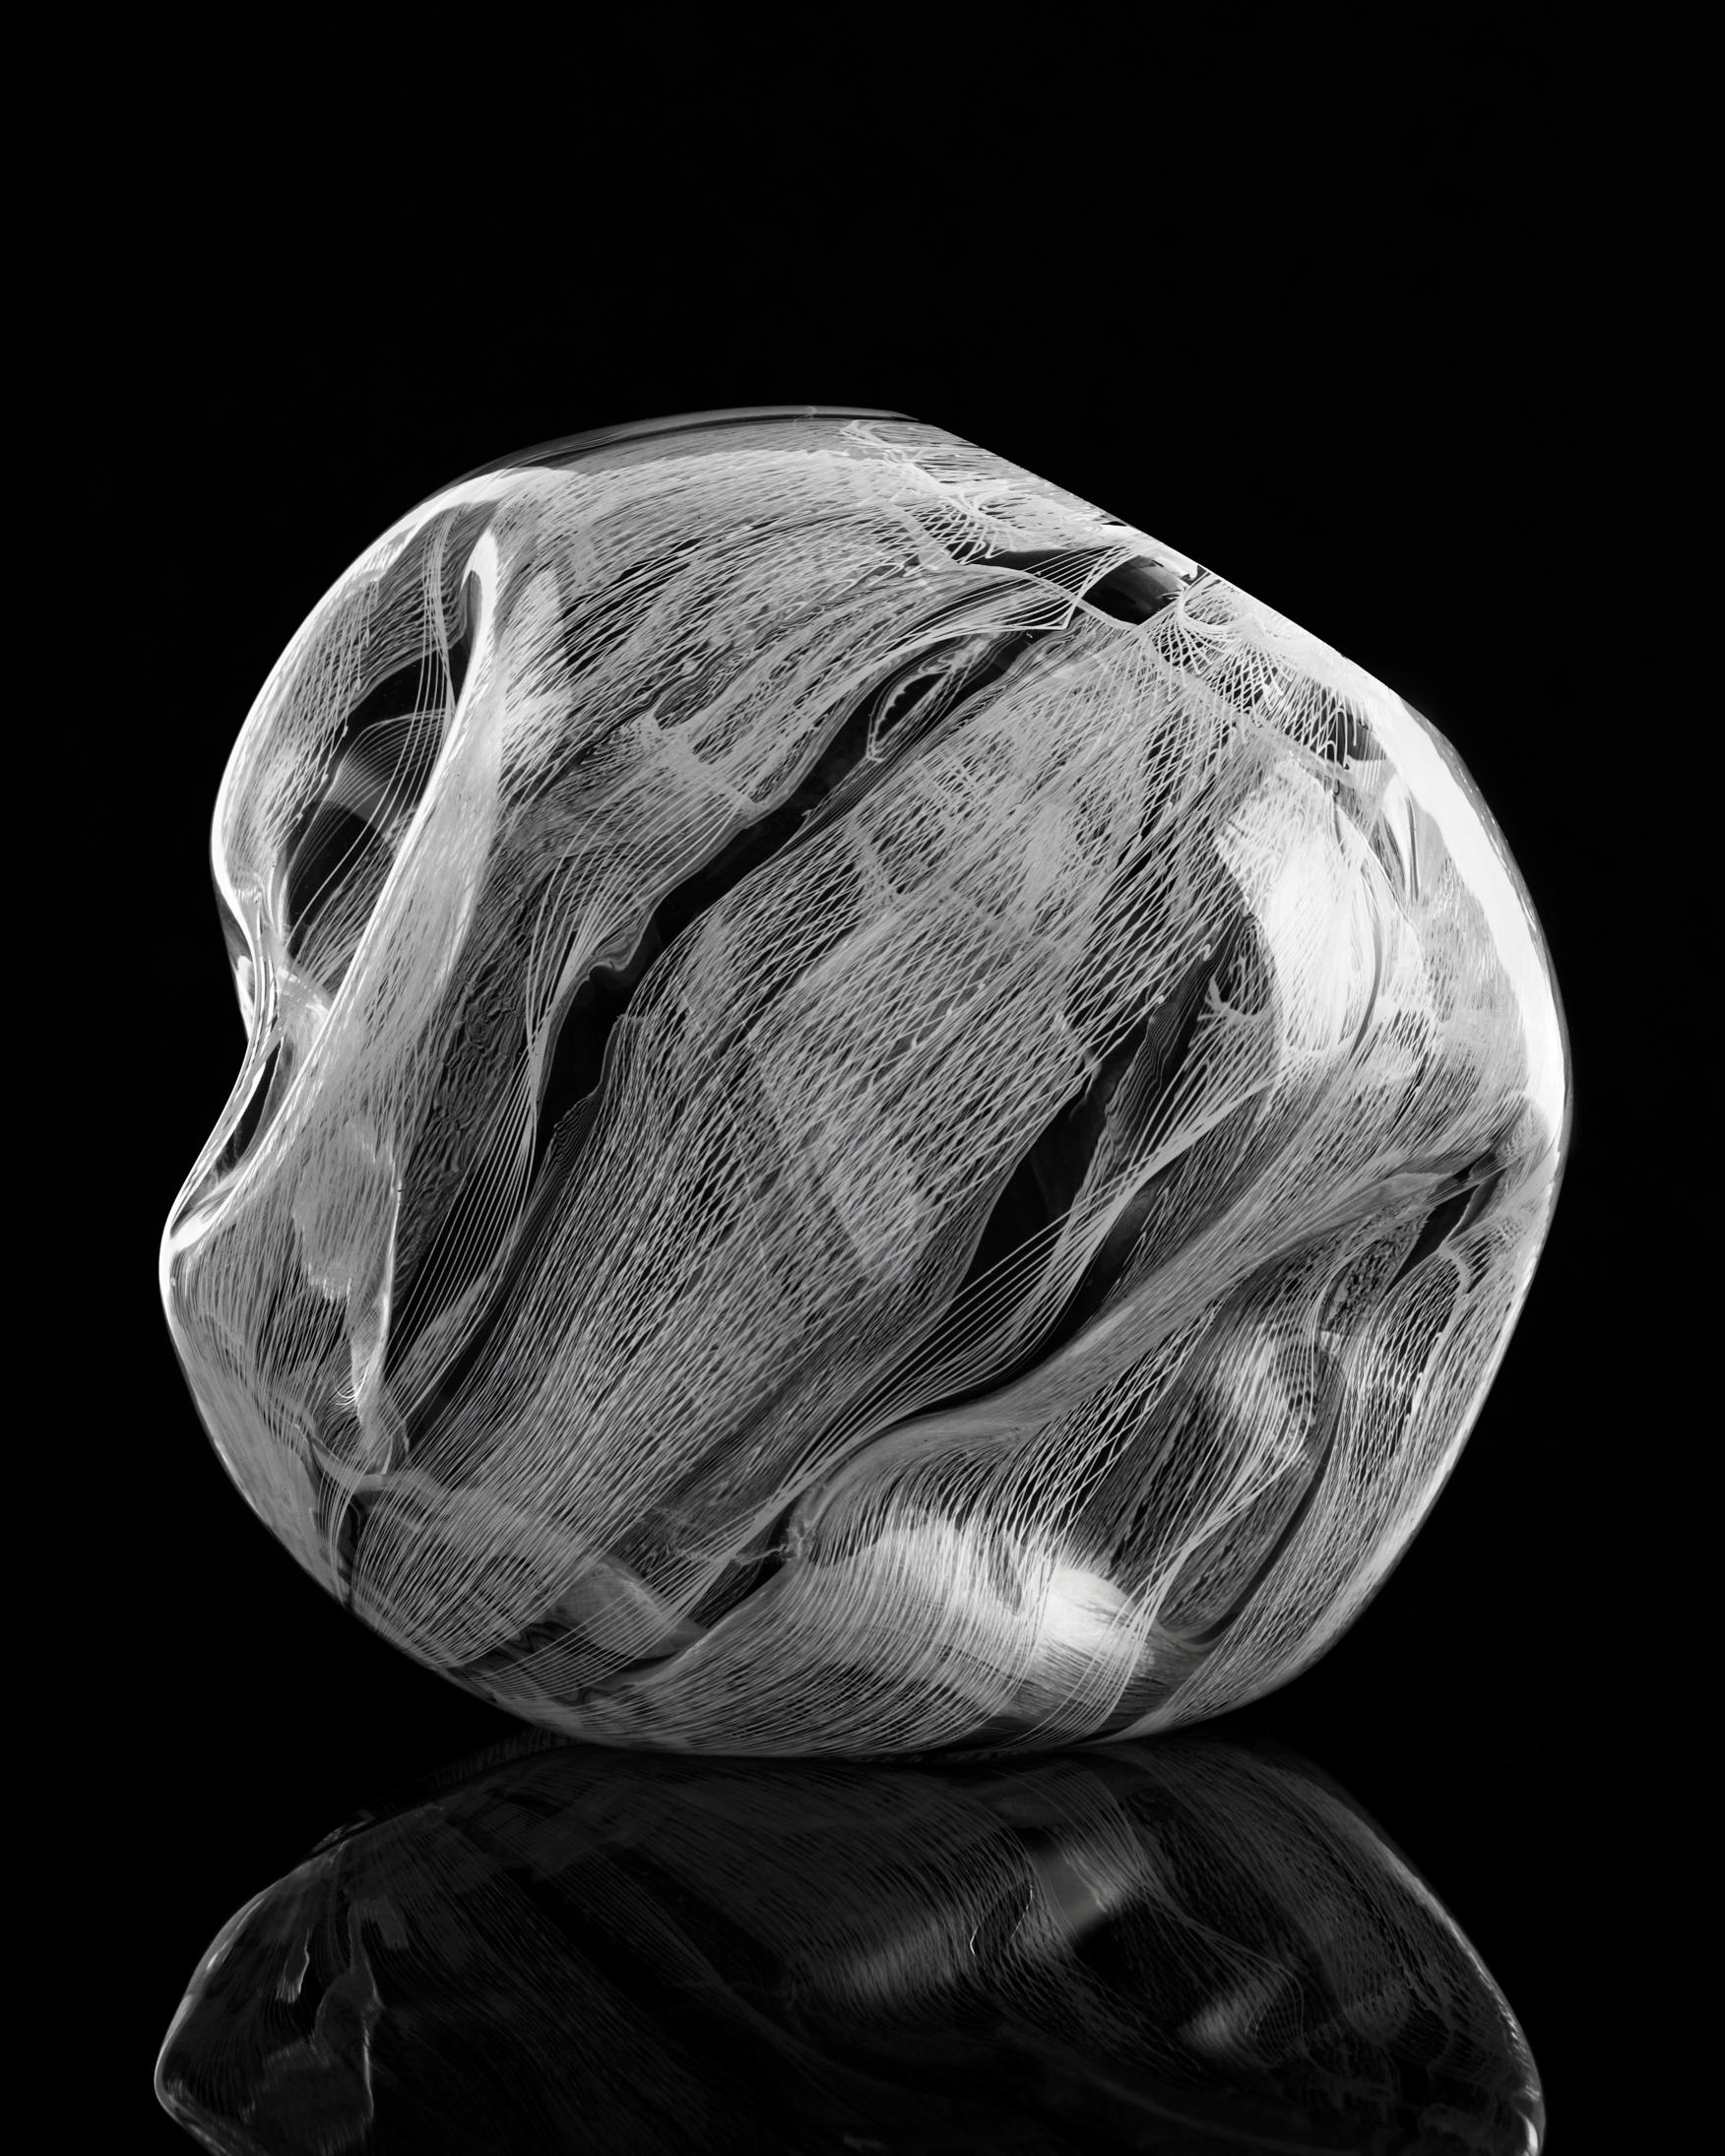 Blown Glass Unique Crumpled Sculptural Vessel by Jeff Zimmerman and James Mongrain